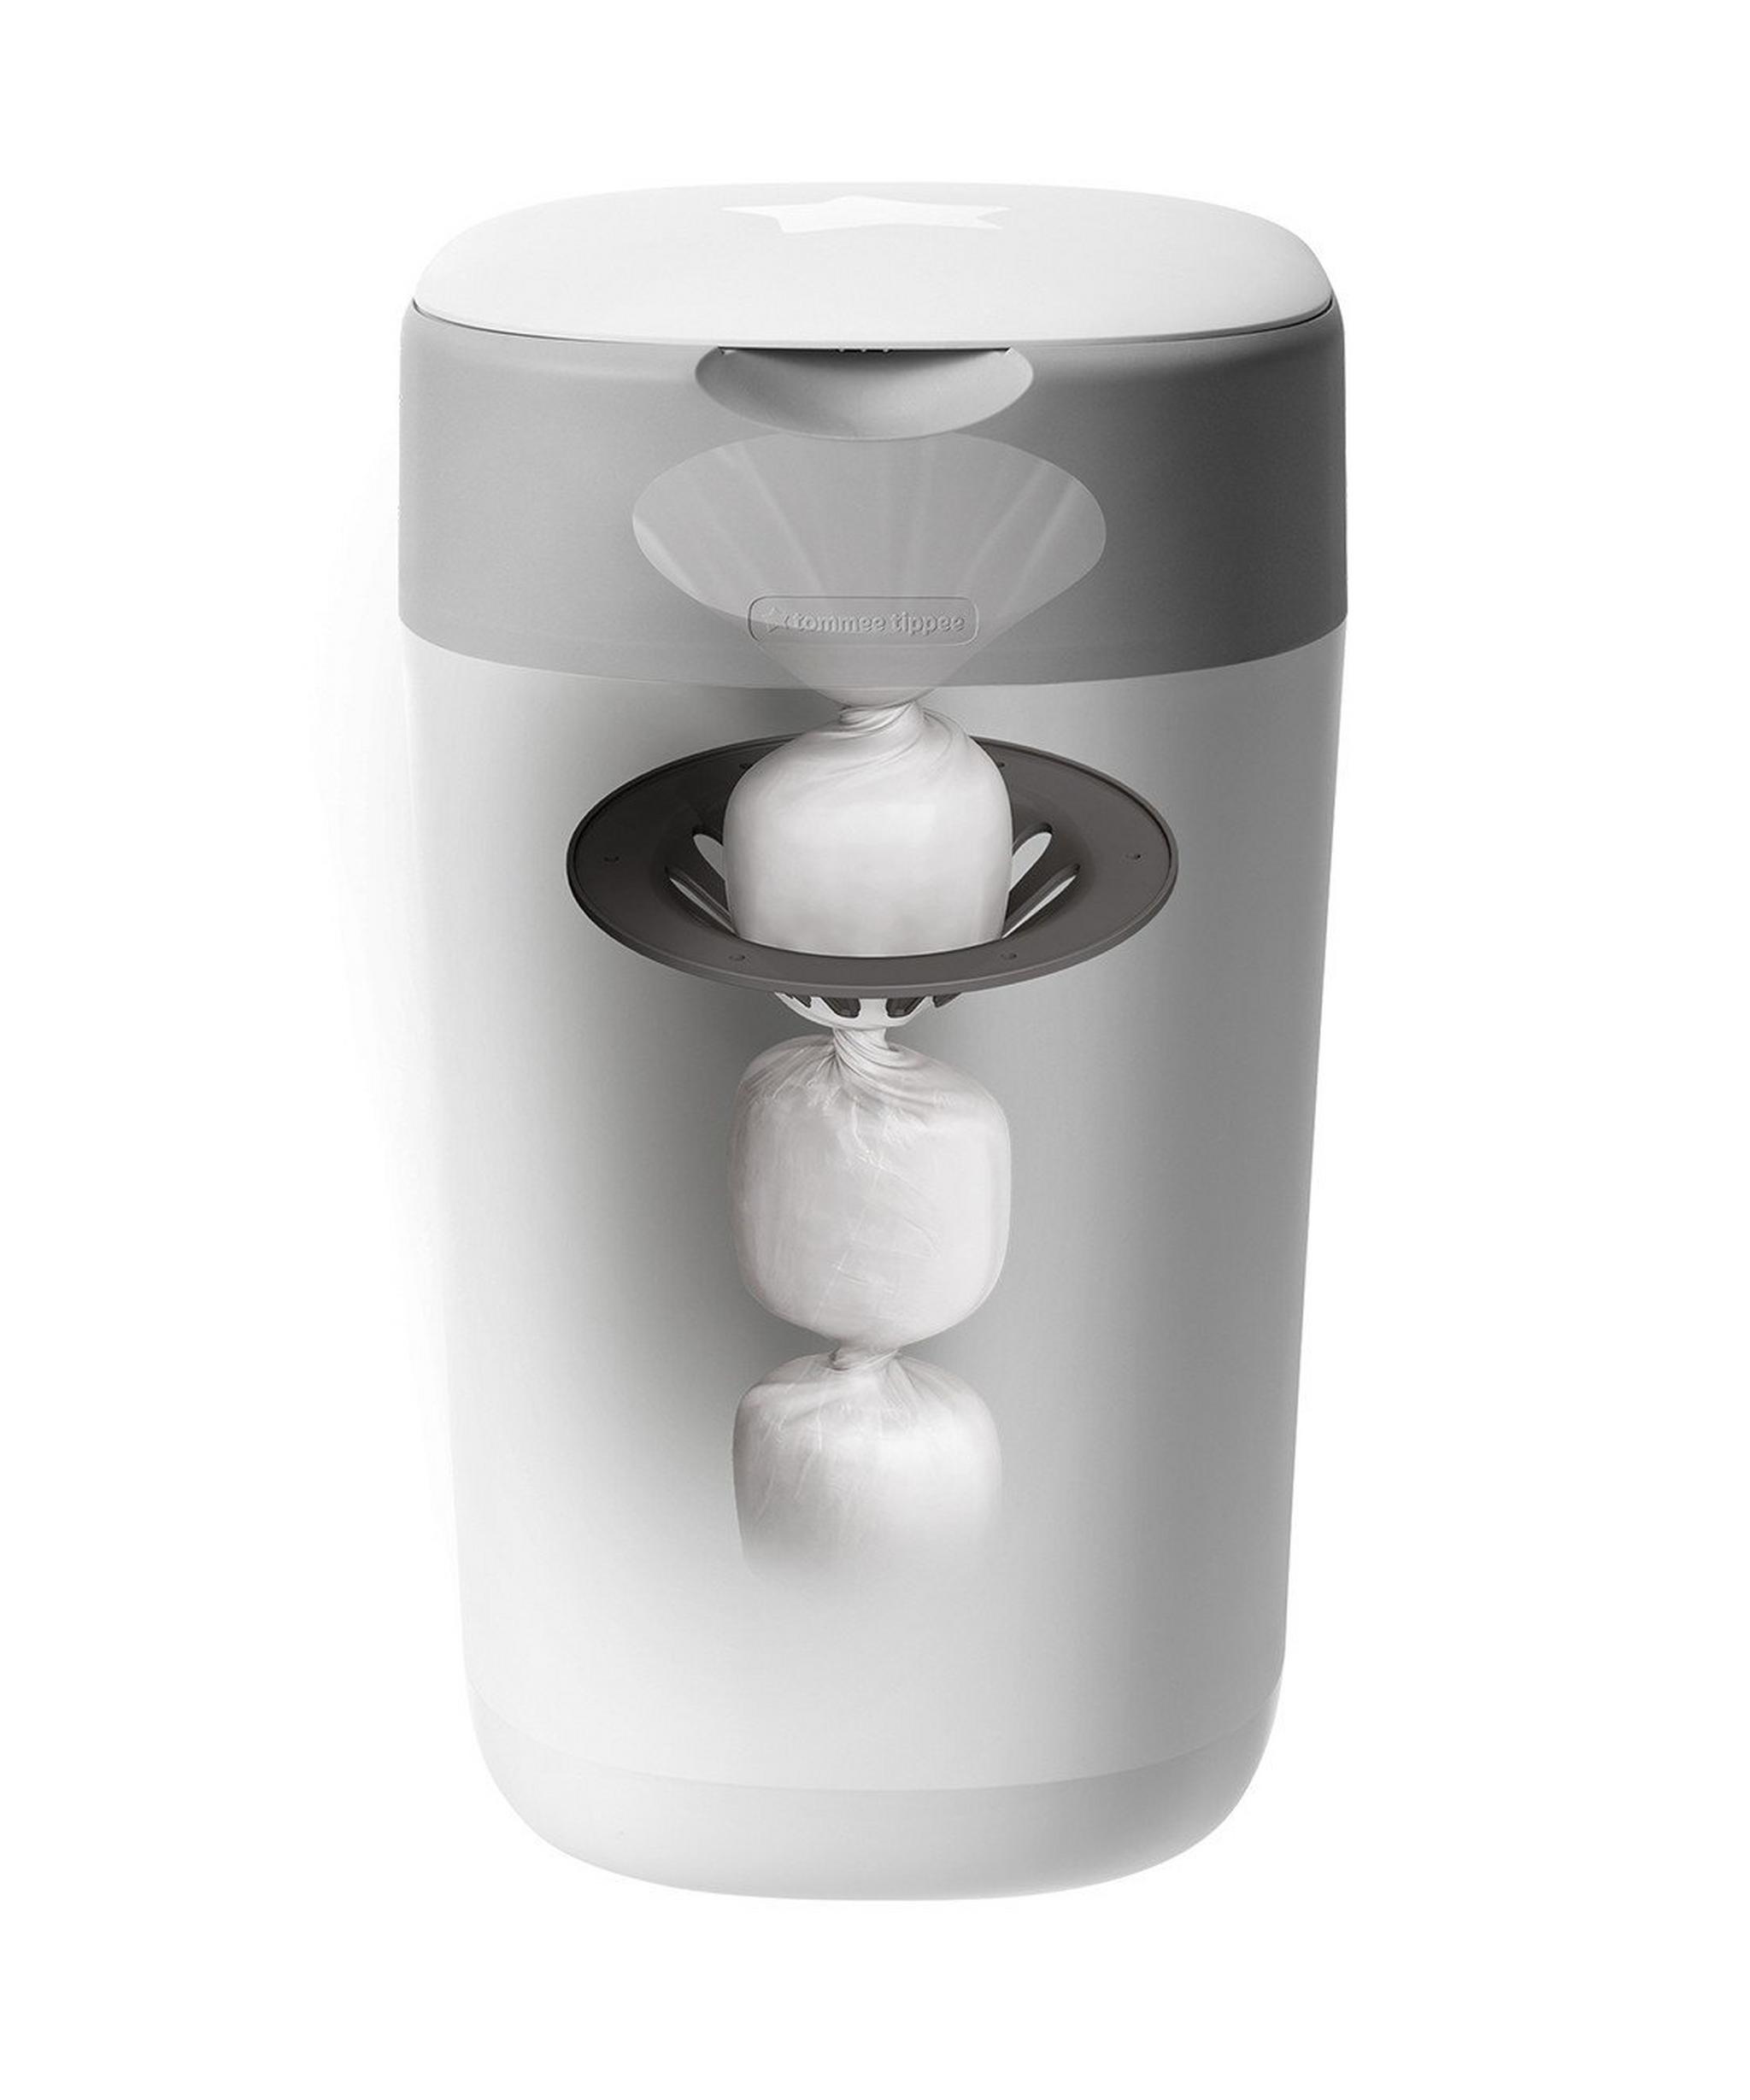 Tommee Tippee twist & Click Advanced Nappy Disposal Bin (TT85100101) - White